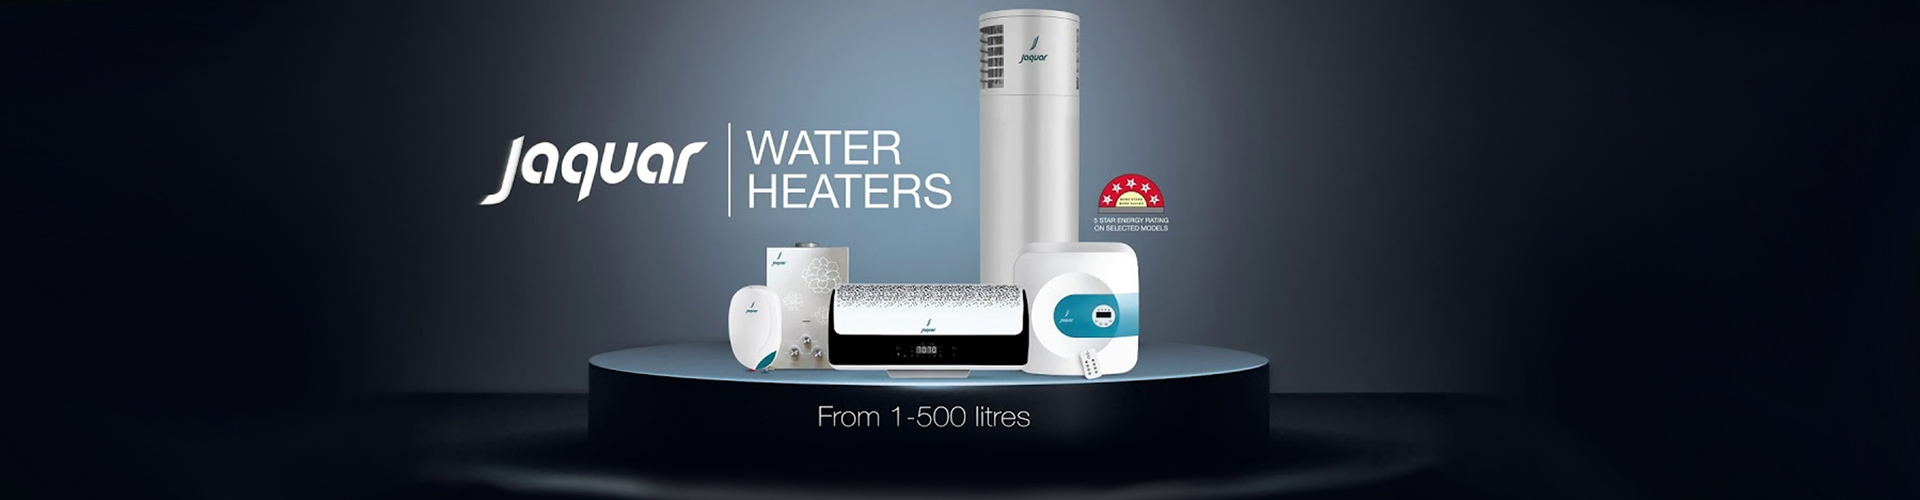 Water Heater Suppliers UAE